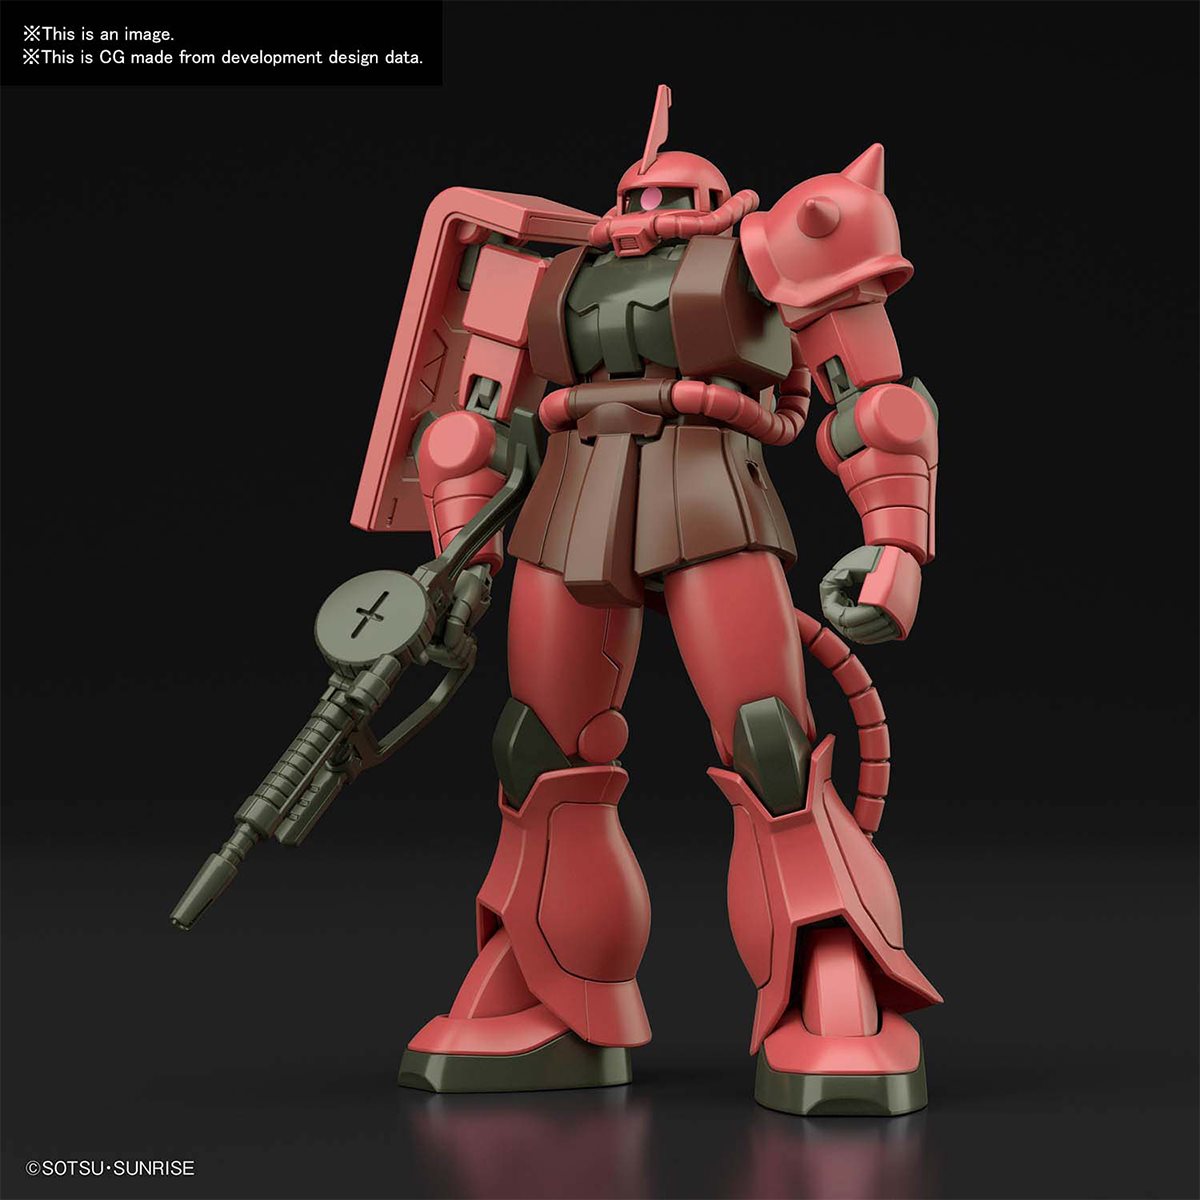 Bandai Gundam Ms-06s Zaku II RG 1/144 and HGUC MS 07b 3 Gouf for sale online 